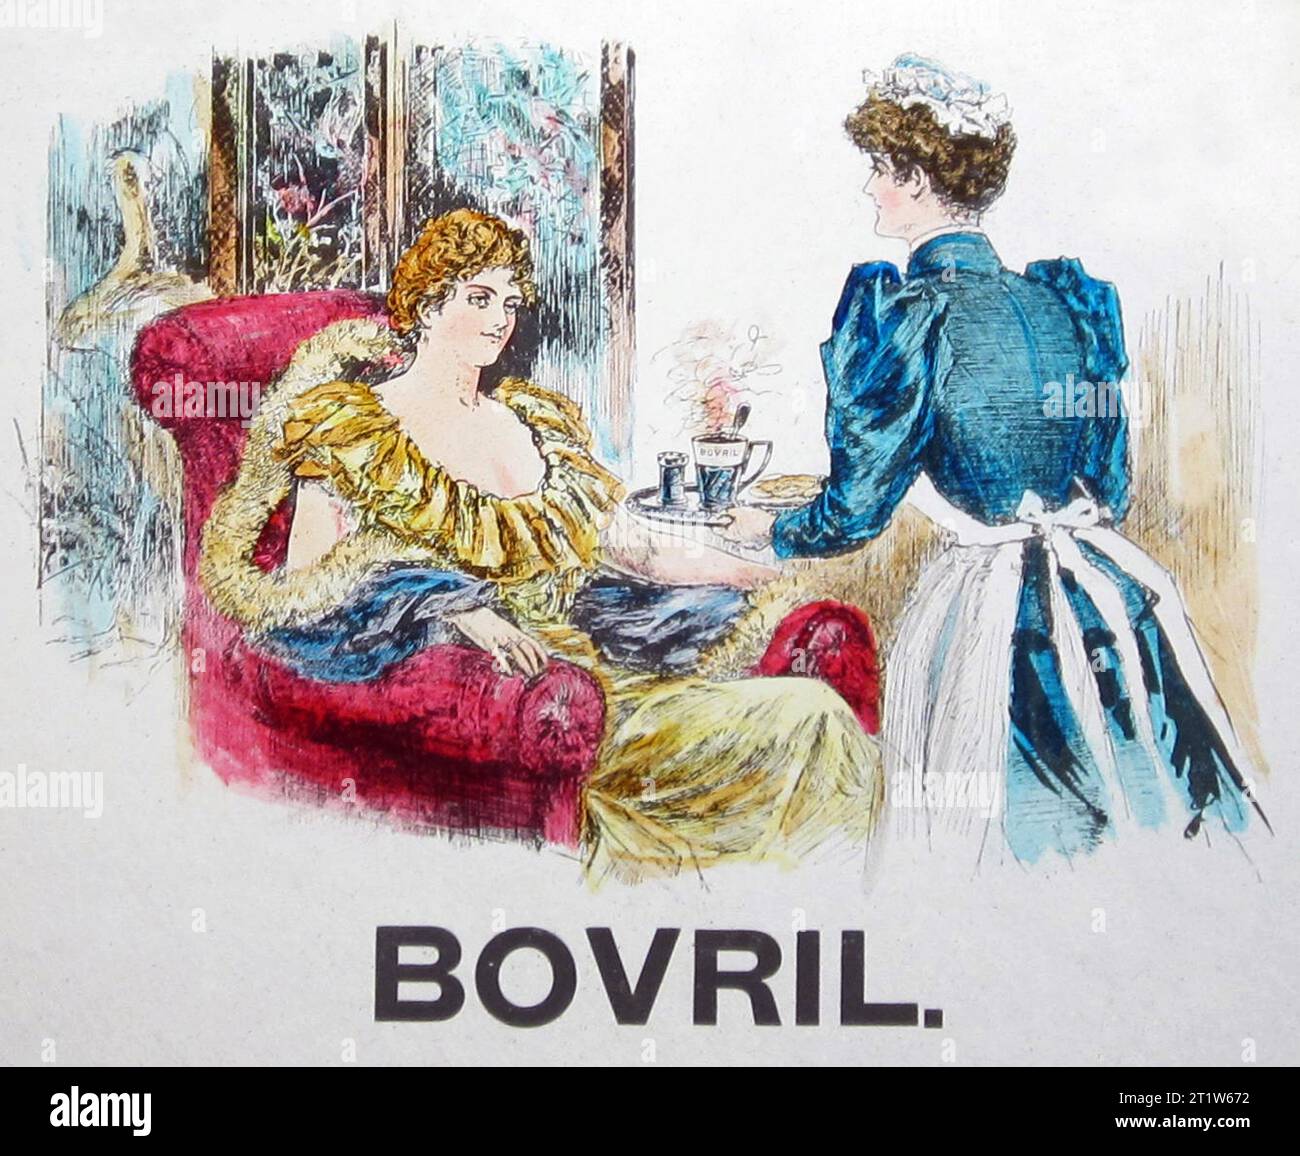 Bovril advertisement, Victorian period Stock Photo